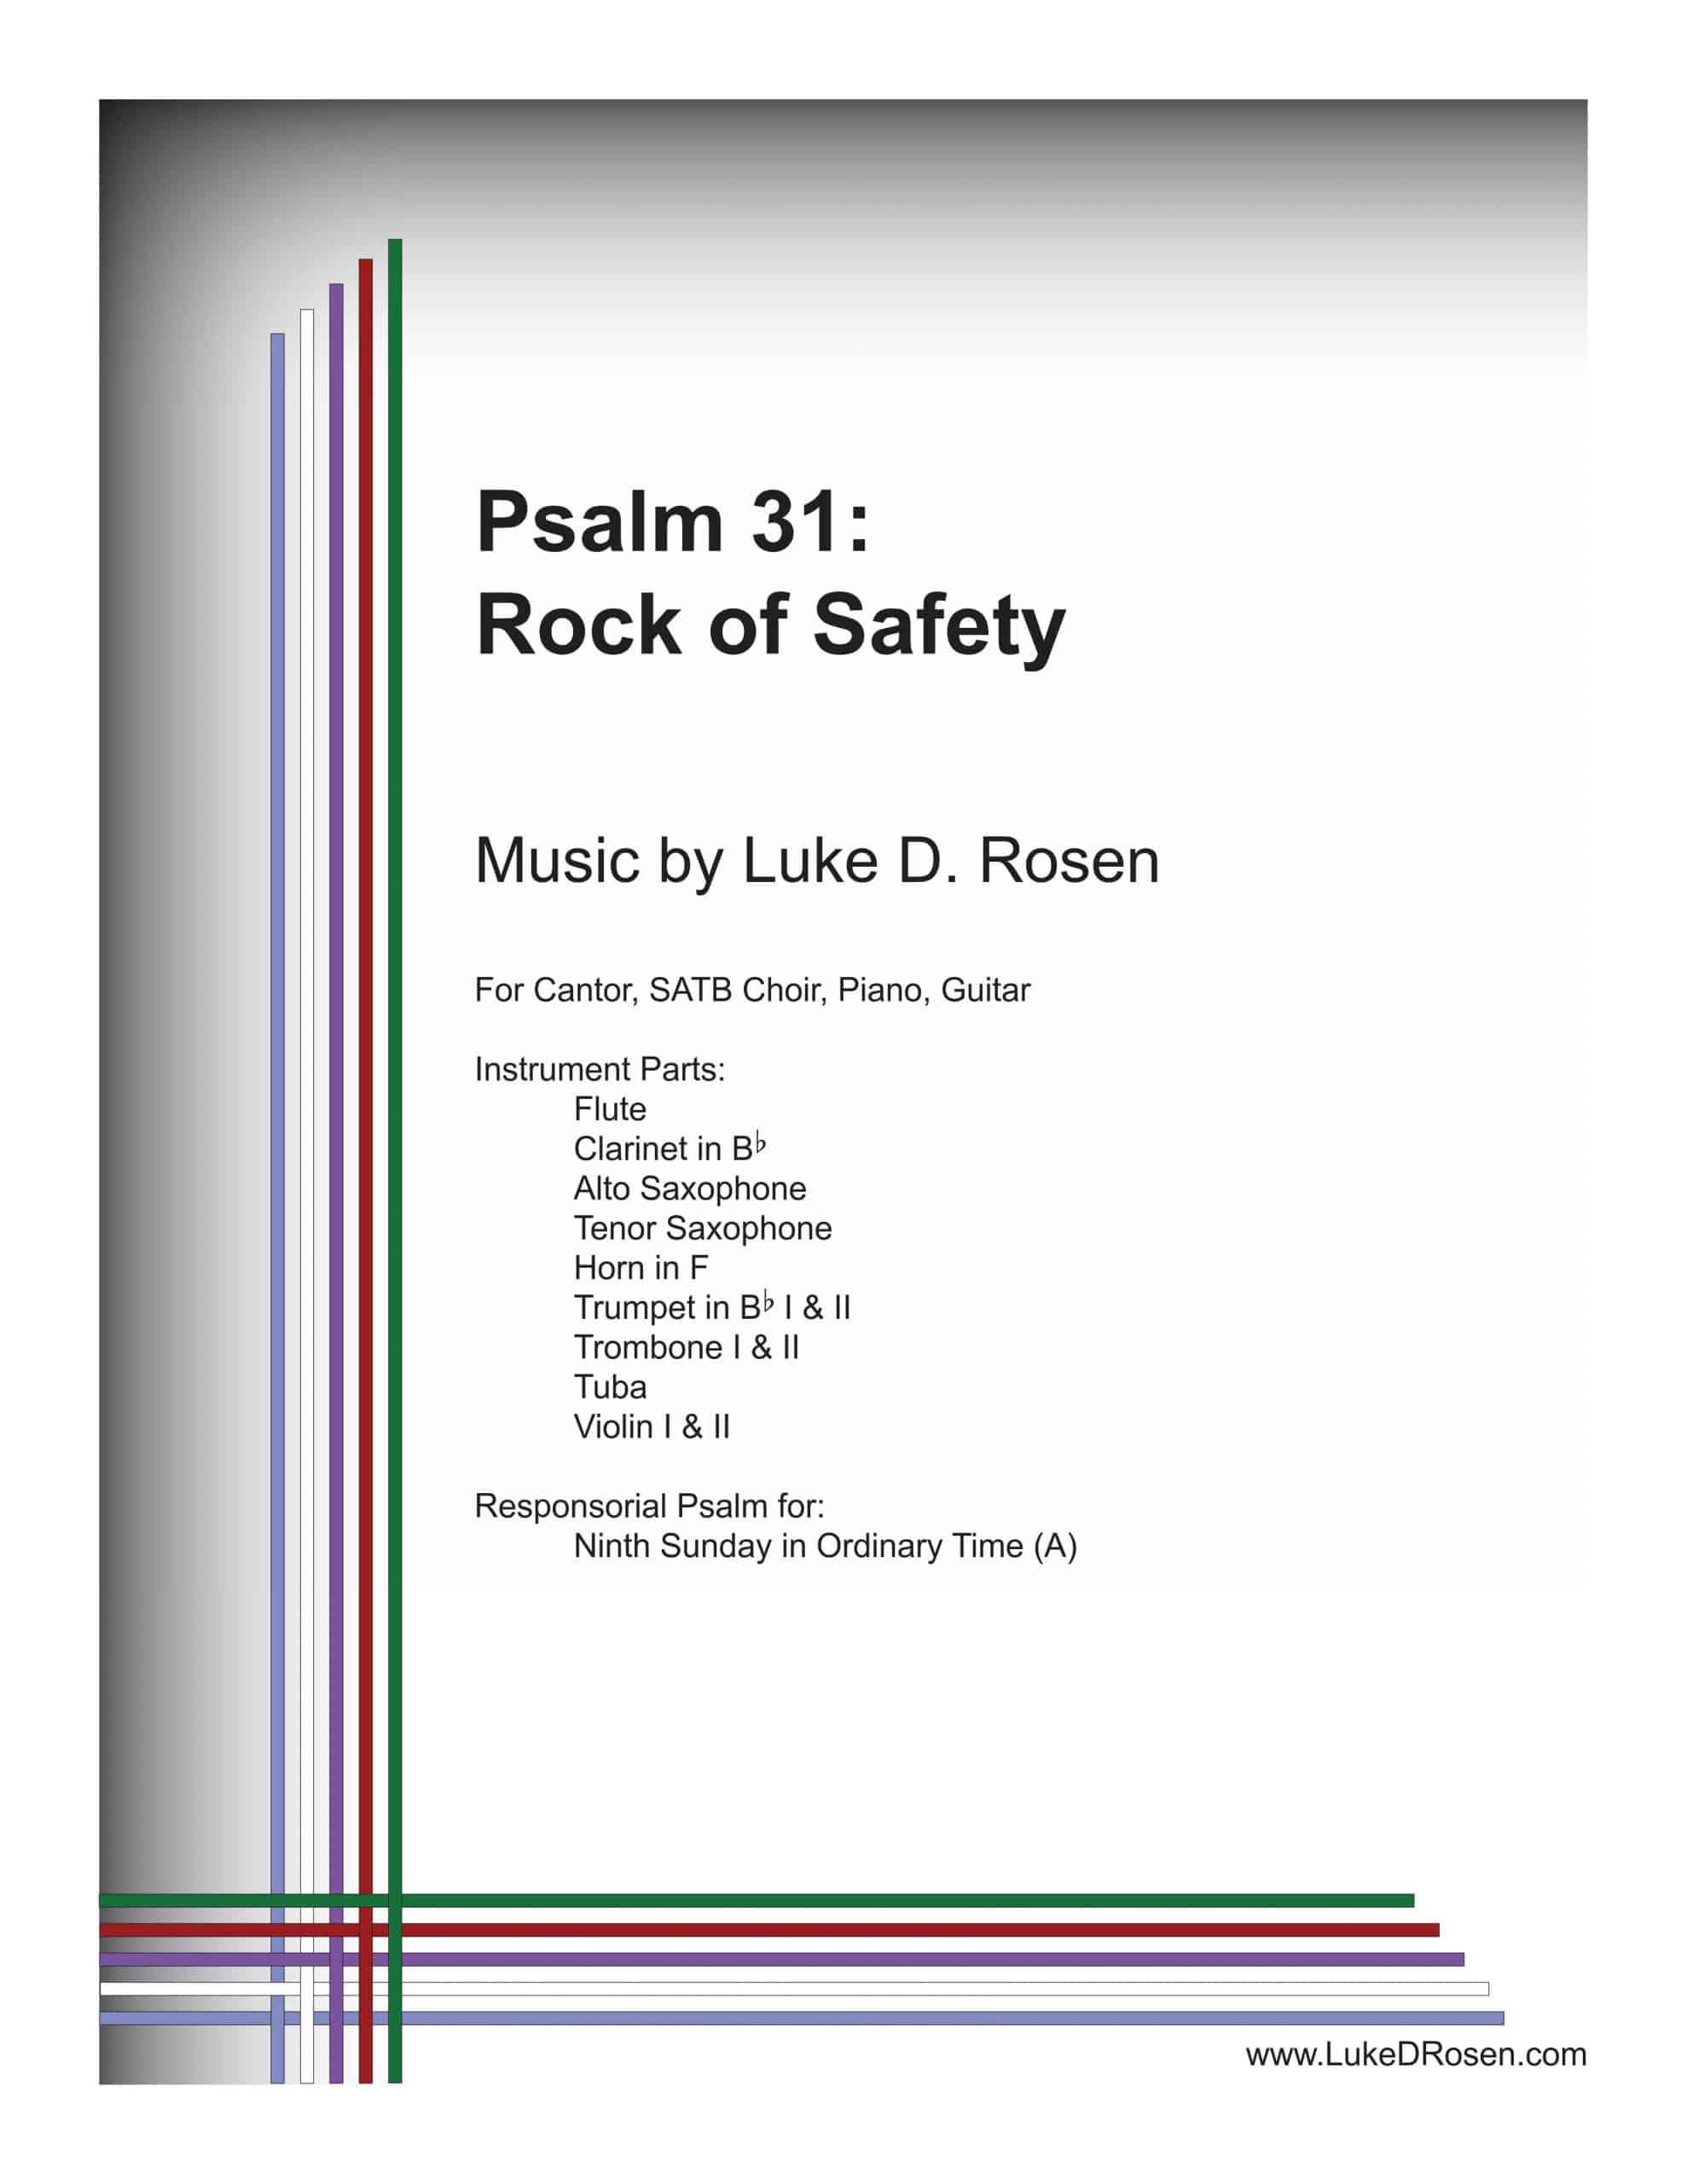 Psalm 31 – Rock of Safety (Rosen)